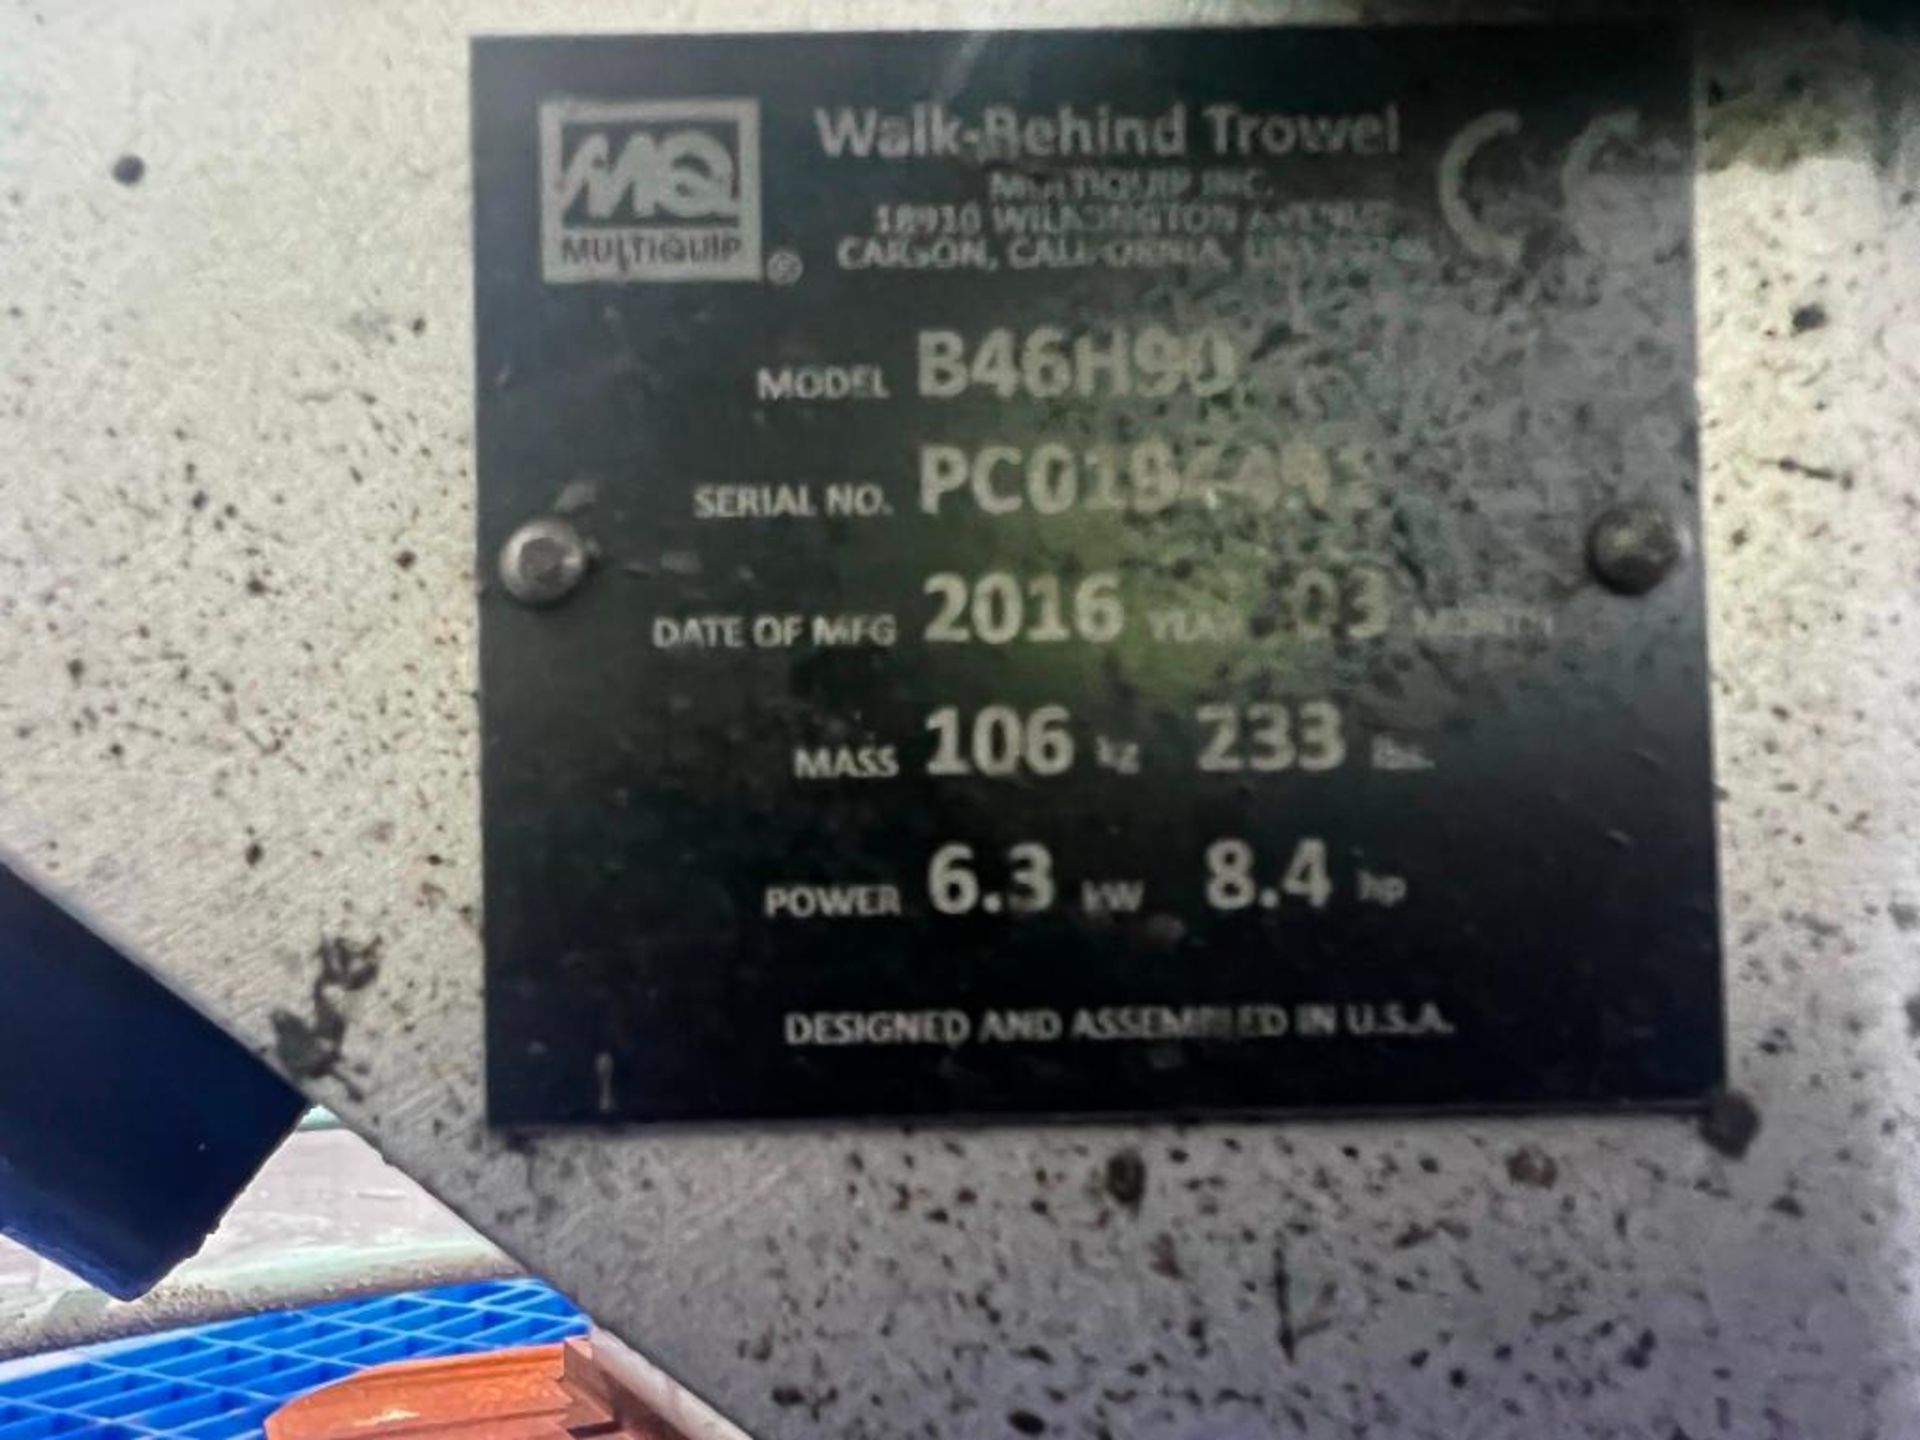 2016 MultiQuip B46H90 Walk-Behind Concrete Trowel - Image 10 of 10